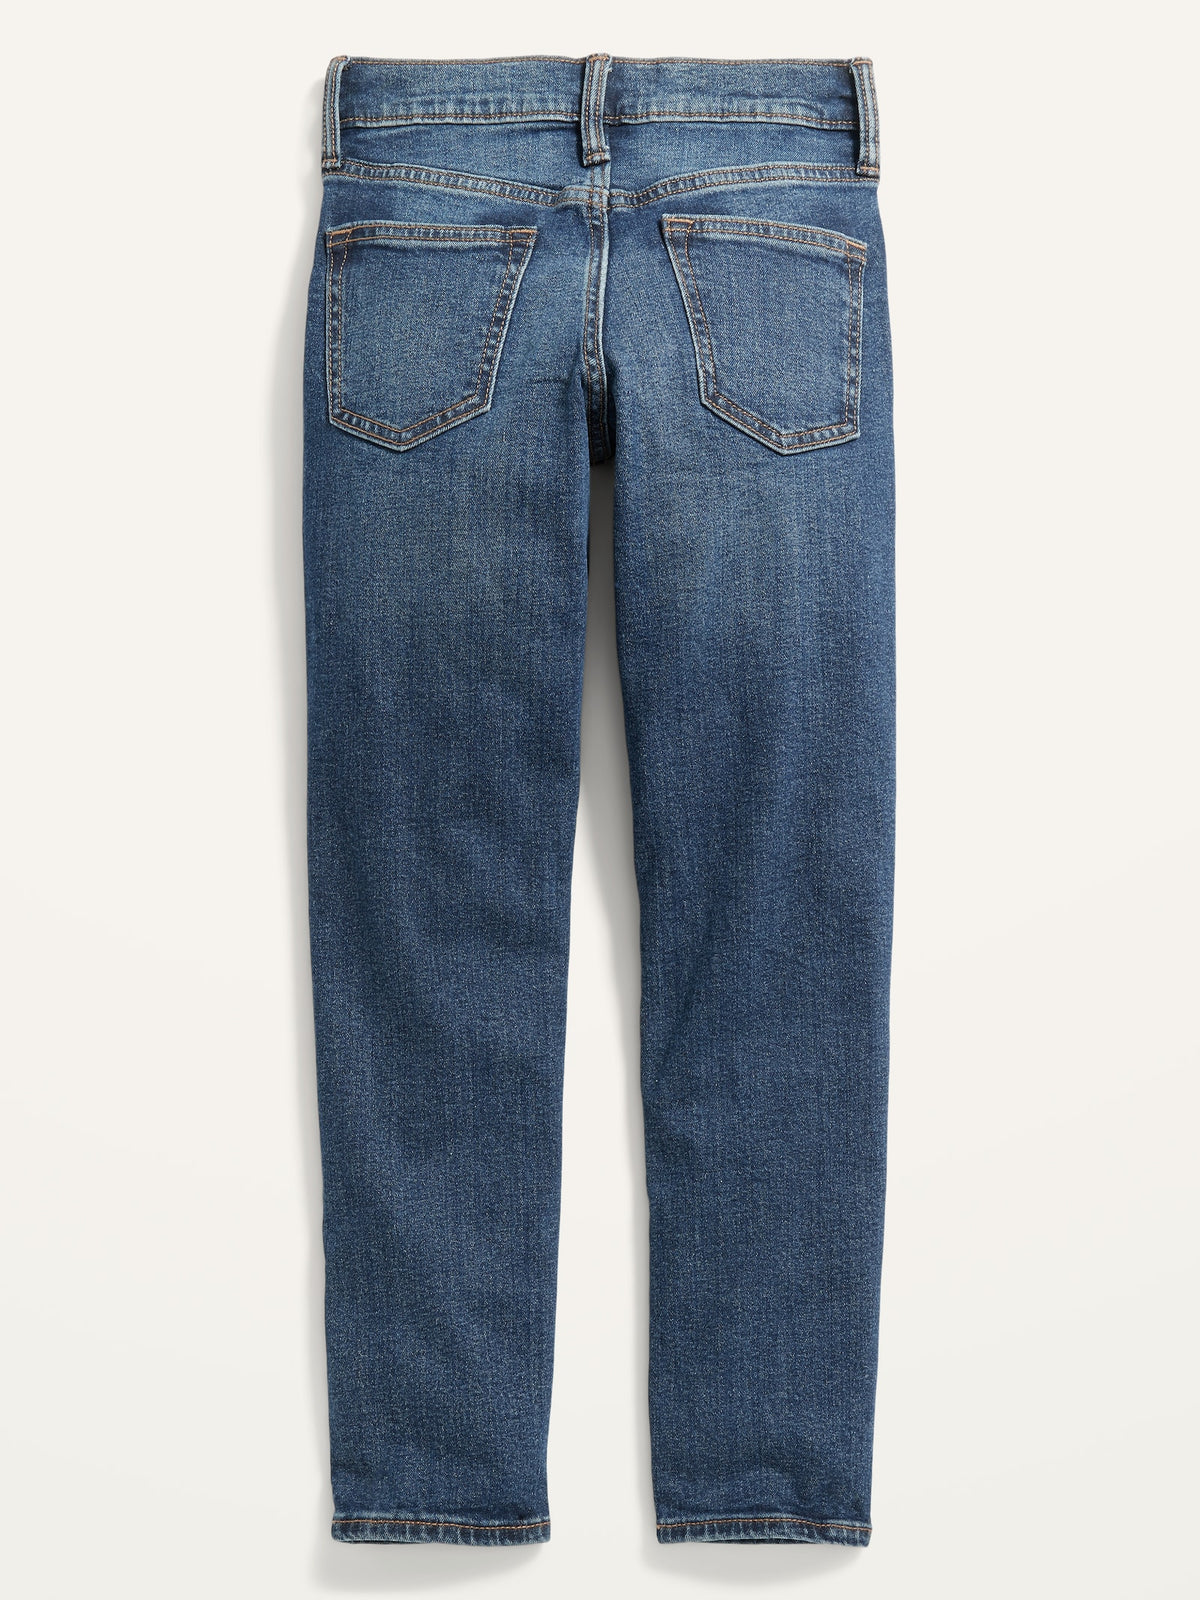 Original Taper Built-In Flex Jeans For Boys